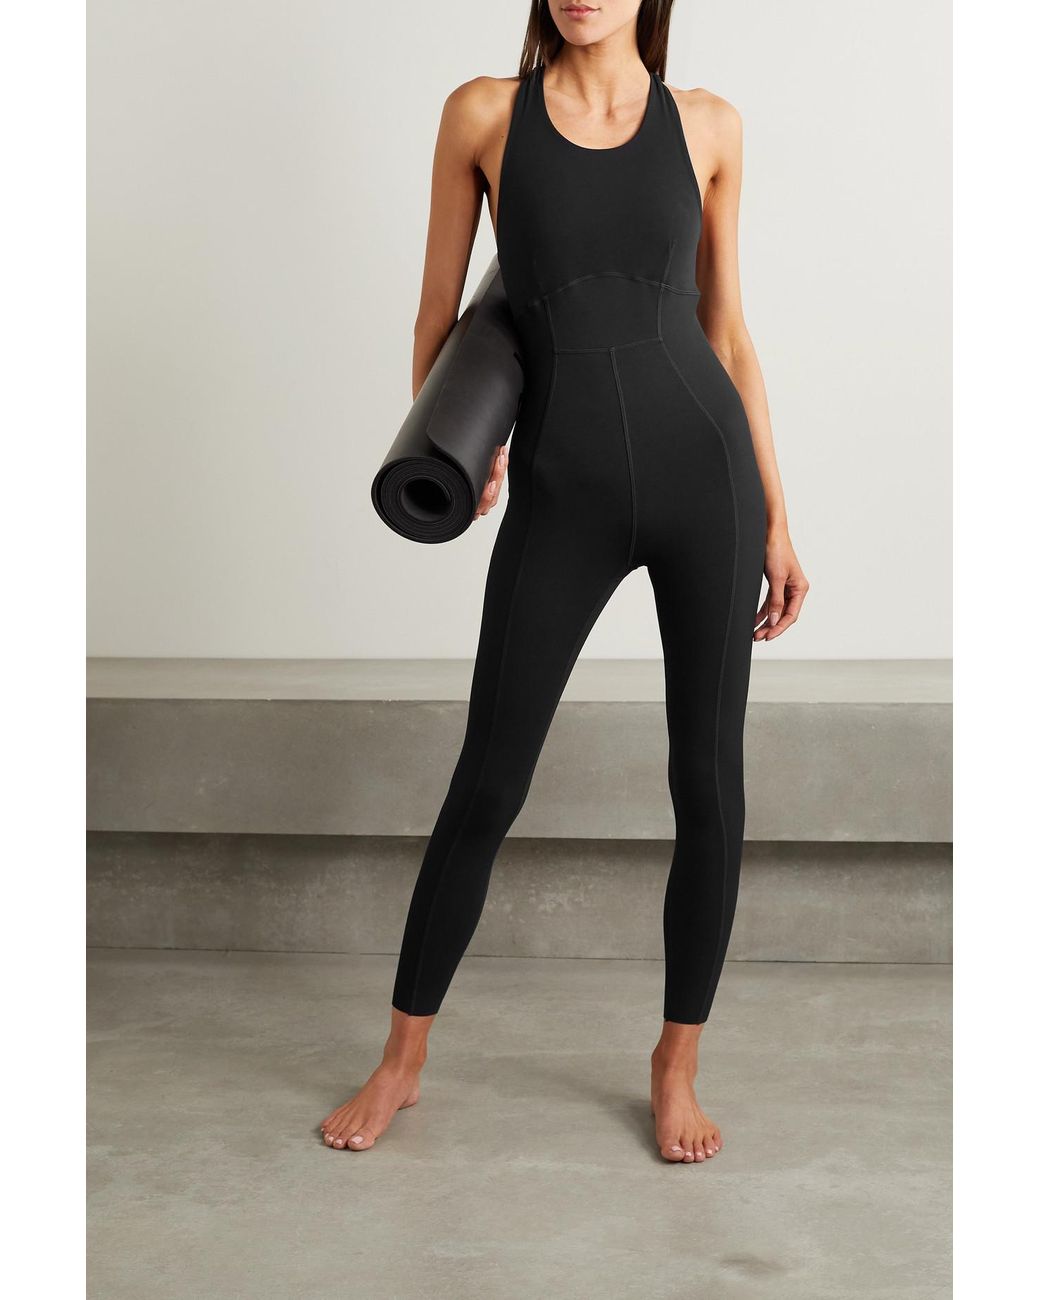 Nike Yoga Luxe Dri-fit Jumpsuit in Black